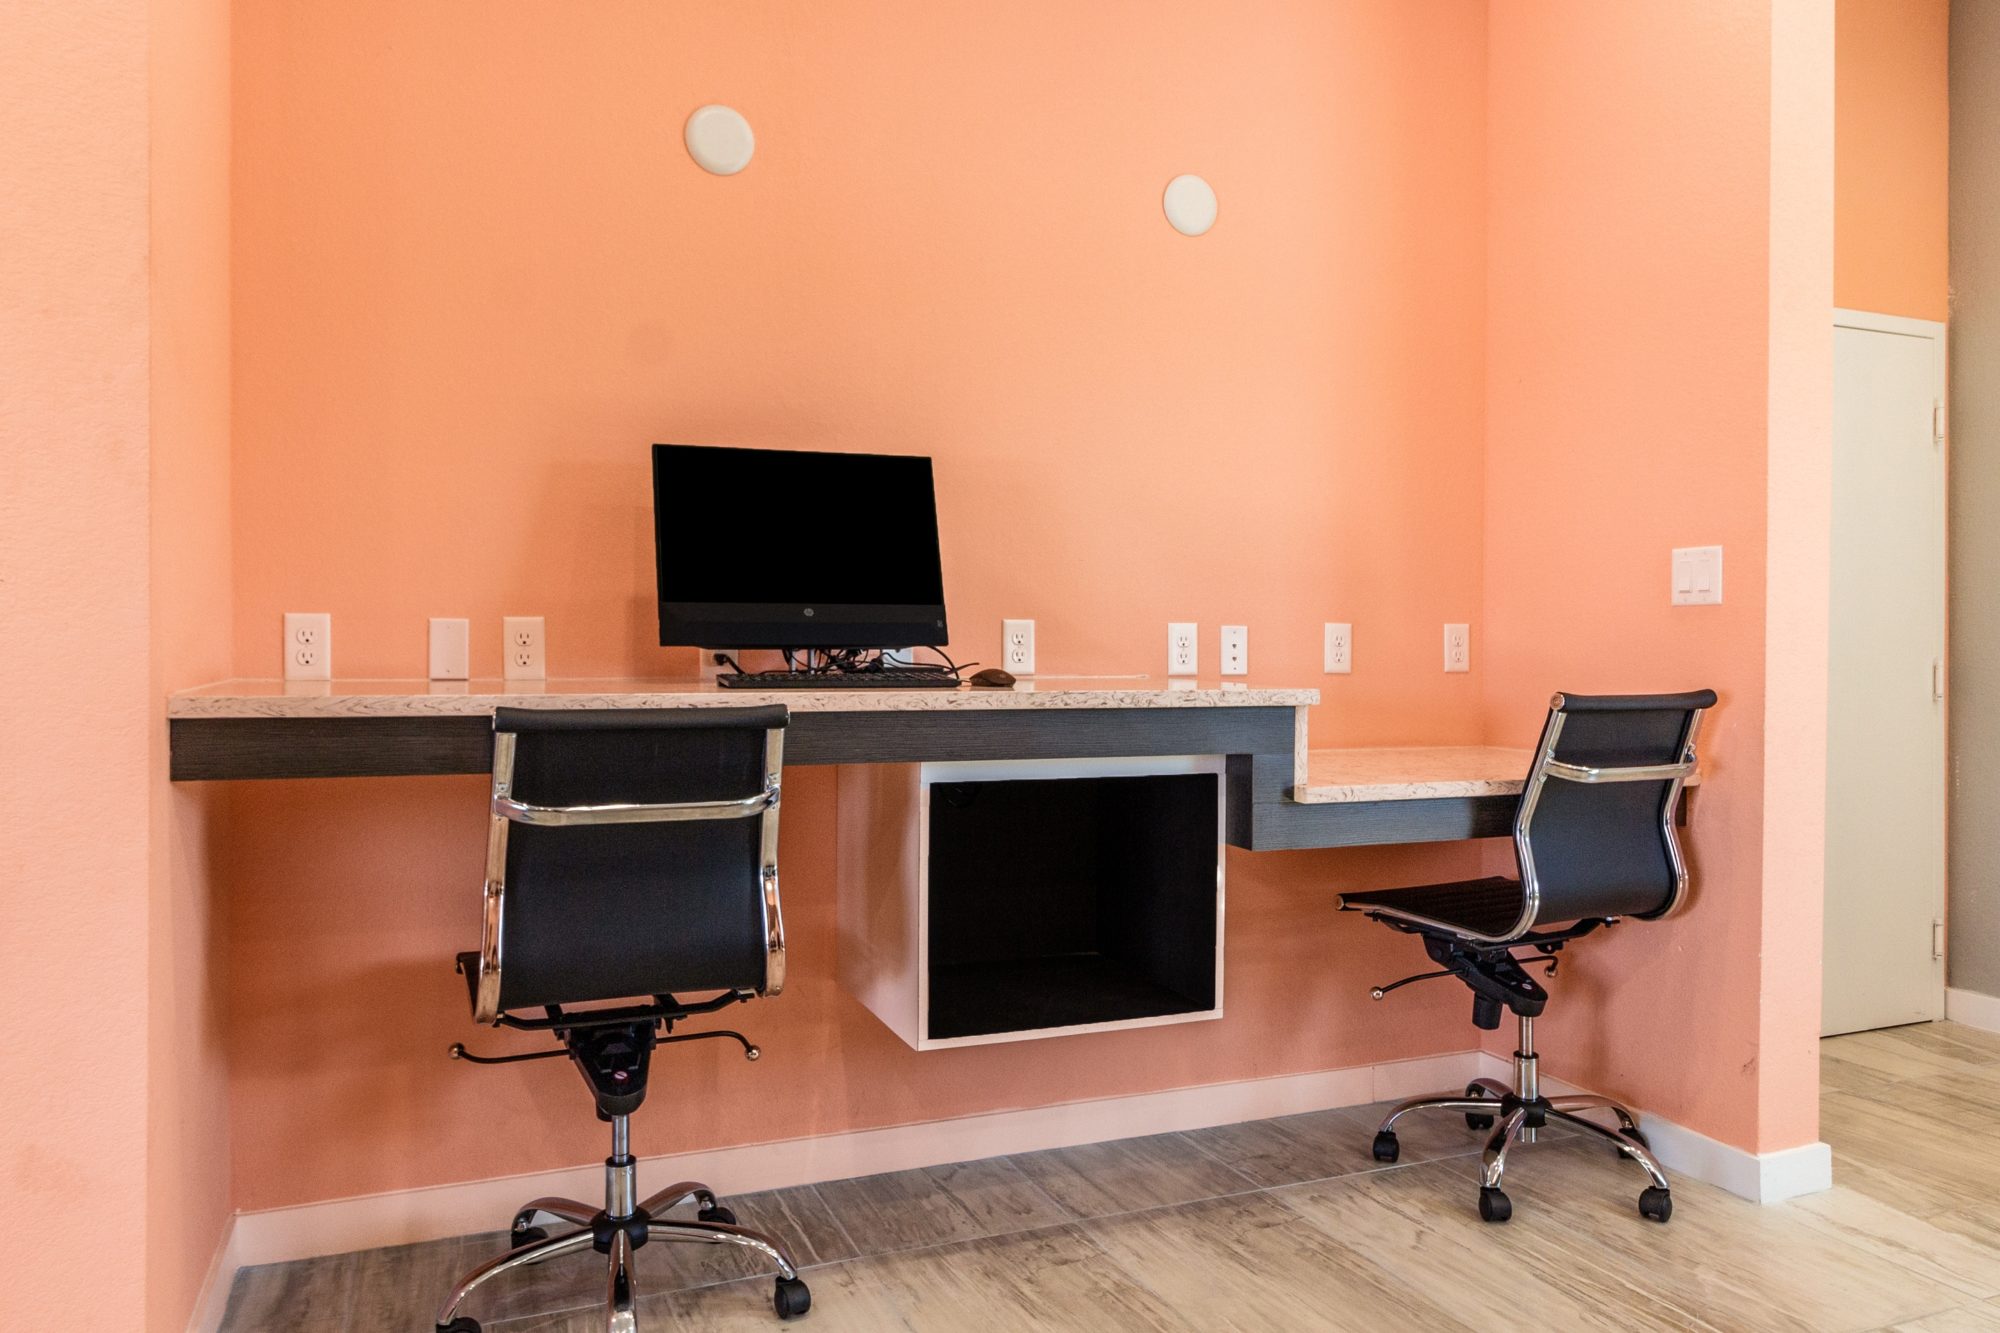 office chairs, monitor, keyboard, wall mounted desk, laminate flooring